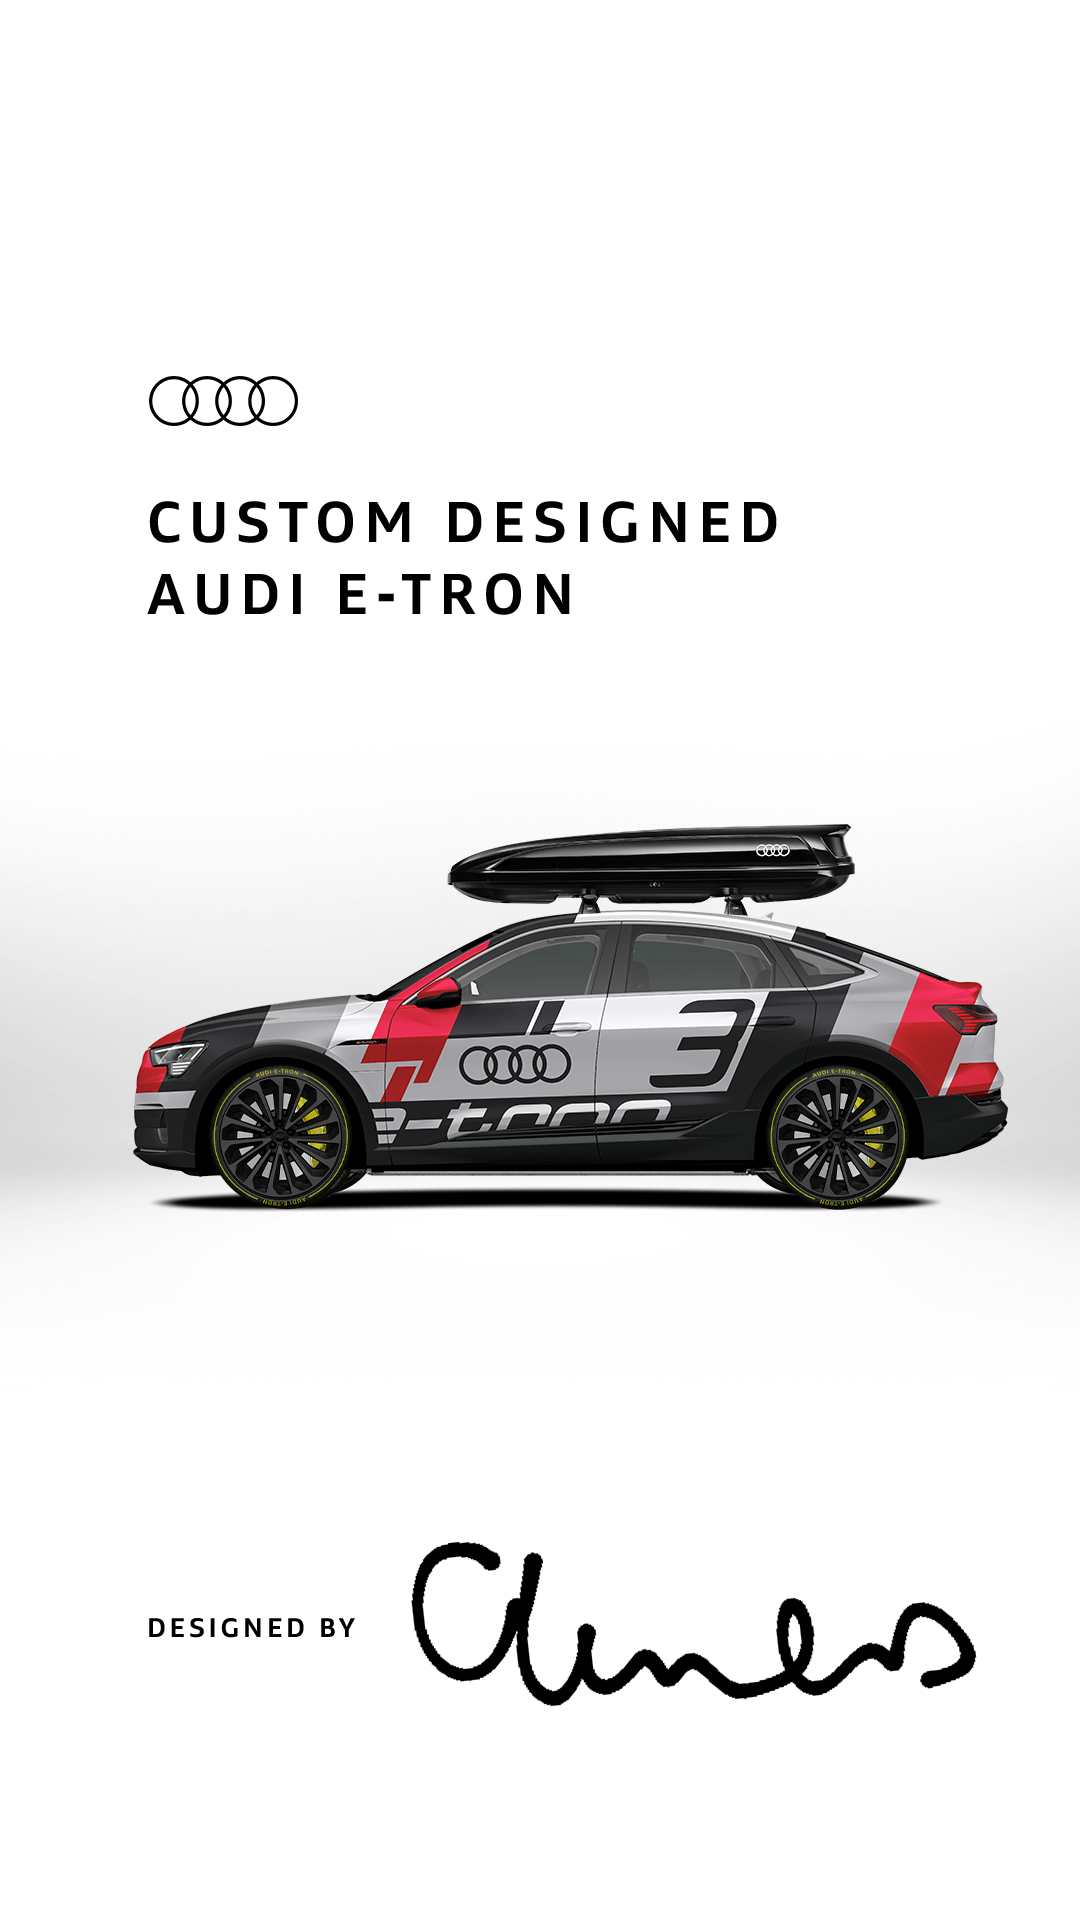 #custometron, Custom Audi e-tron Sportback social Campaign, Designed by Philipp Mandler